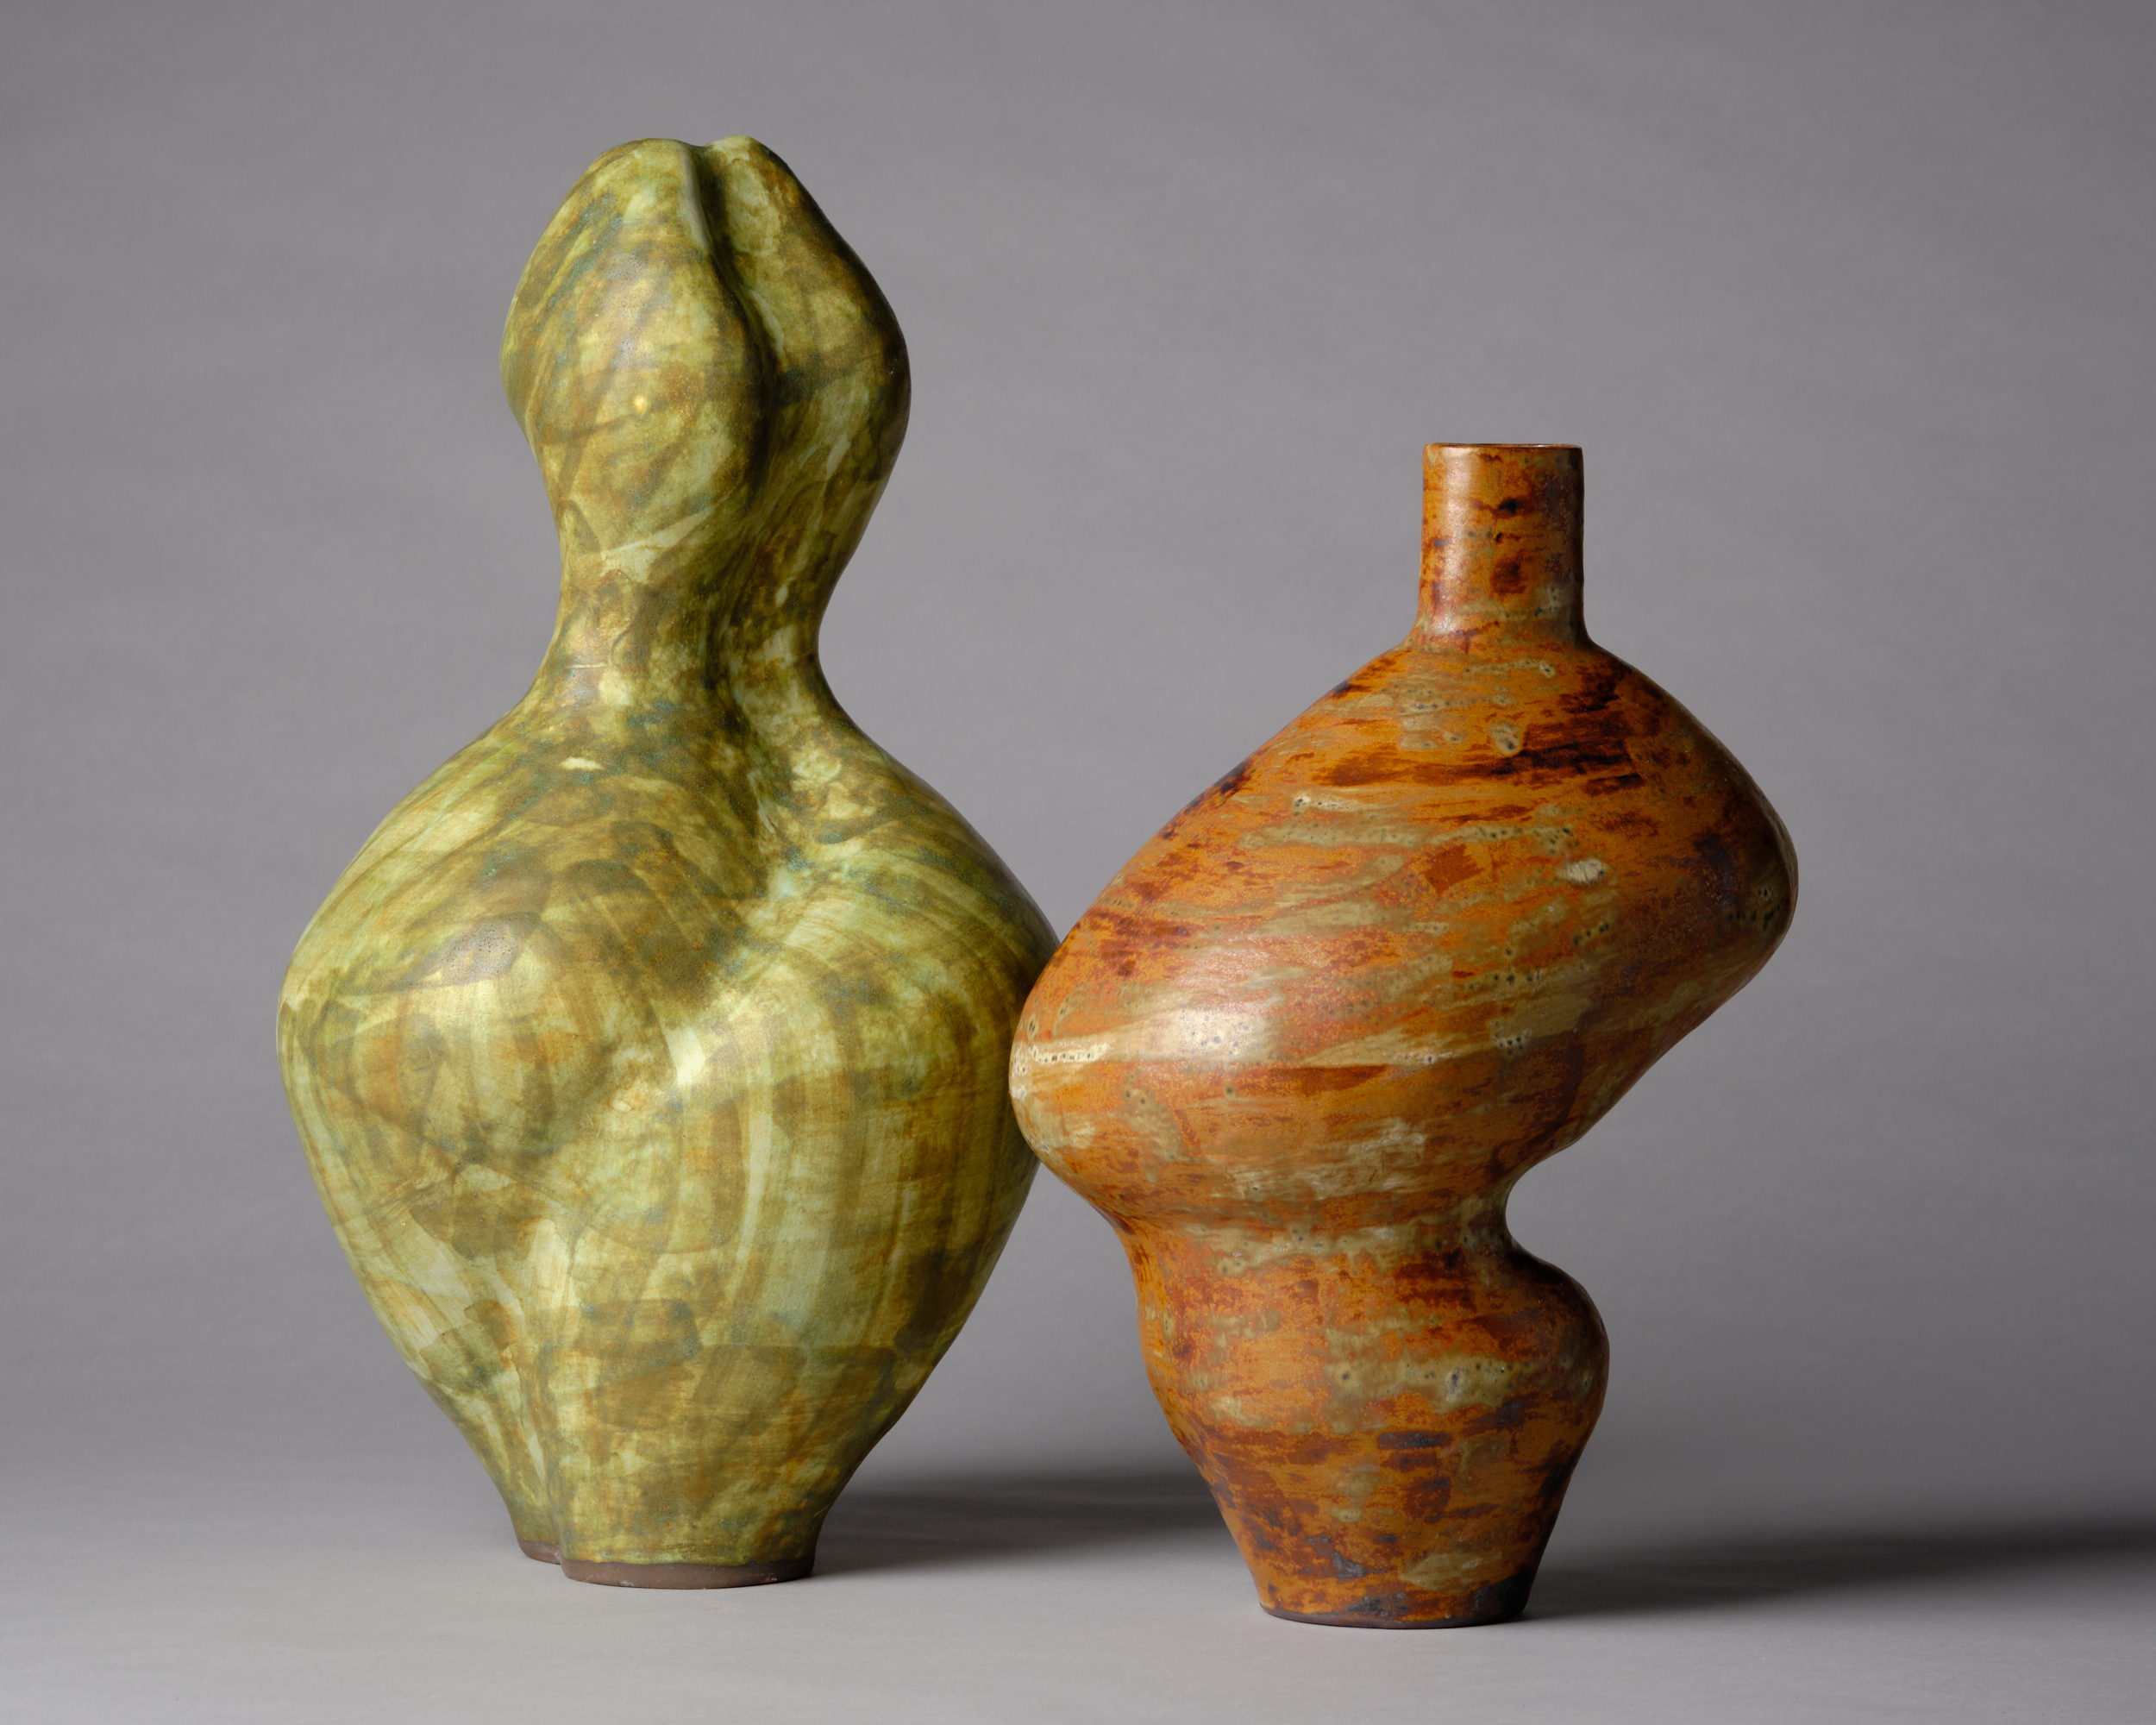 Gail  Schneider, Untitled, . Hand-built stoneware with glaze, Left Pot, 15” x 9” x 9” Right Pot, 17.5” x 9” x 11.5”.